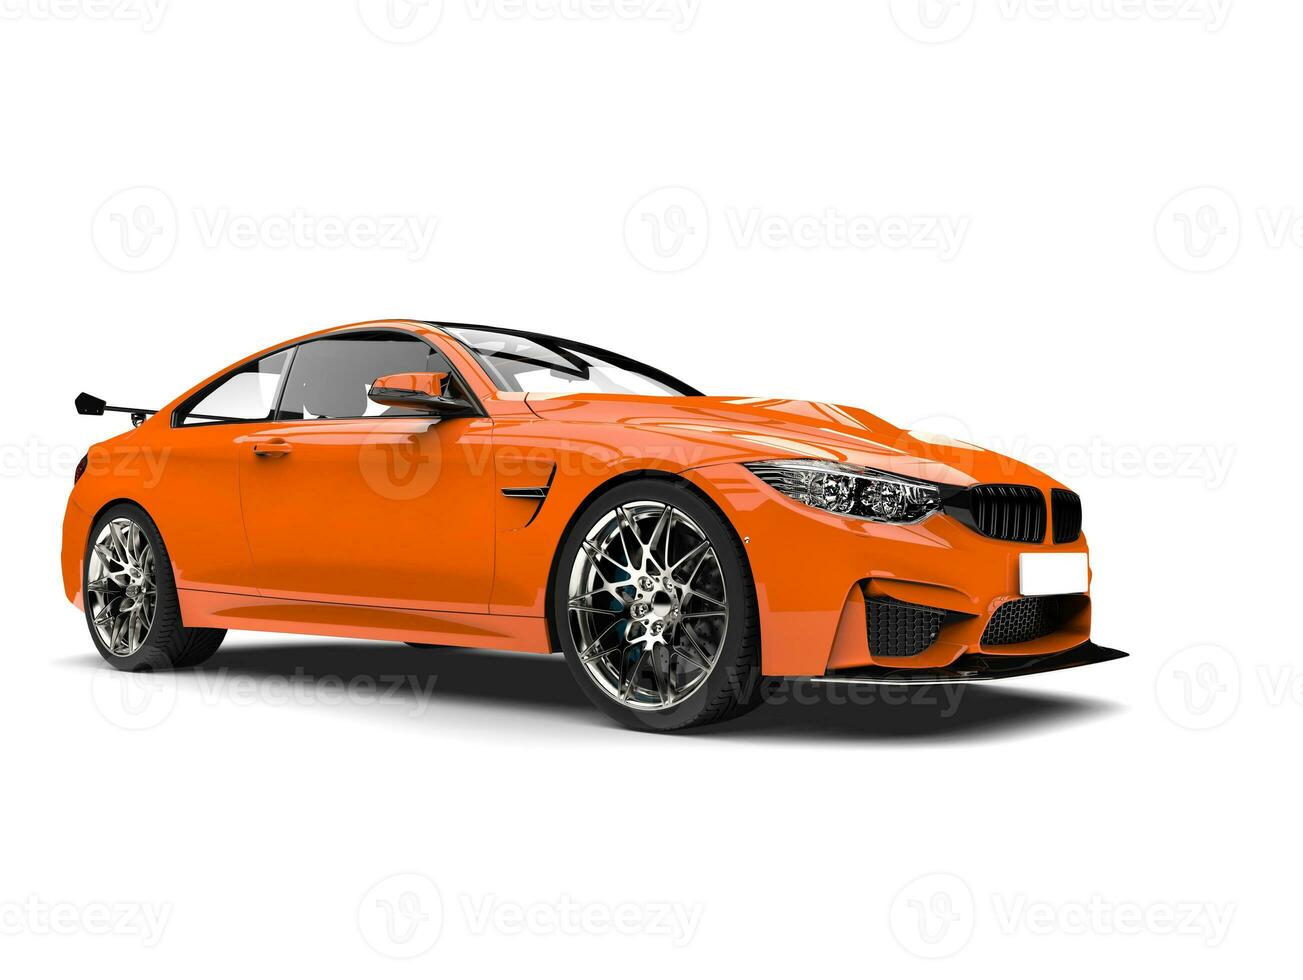 Rico naranja moderno lujo Deportes coche foto